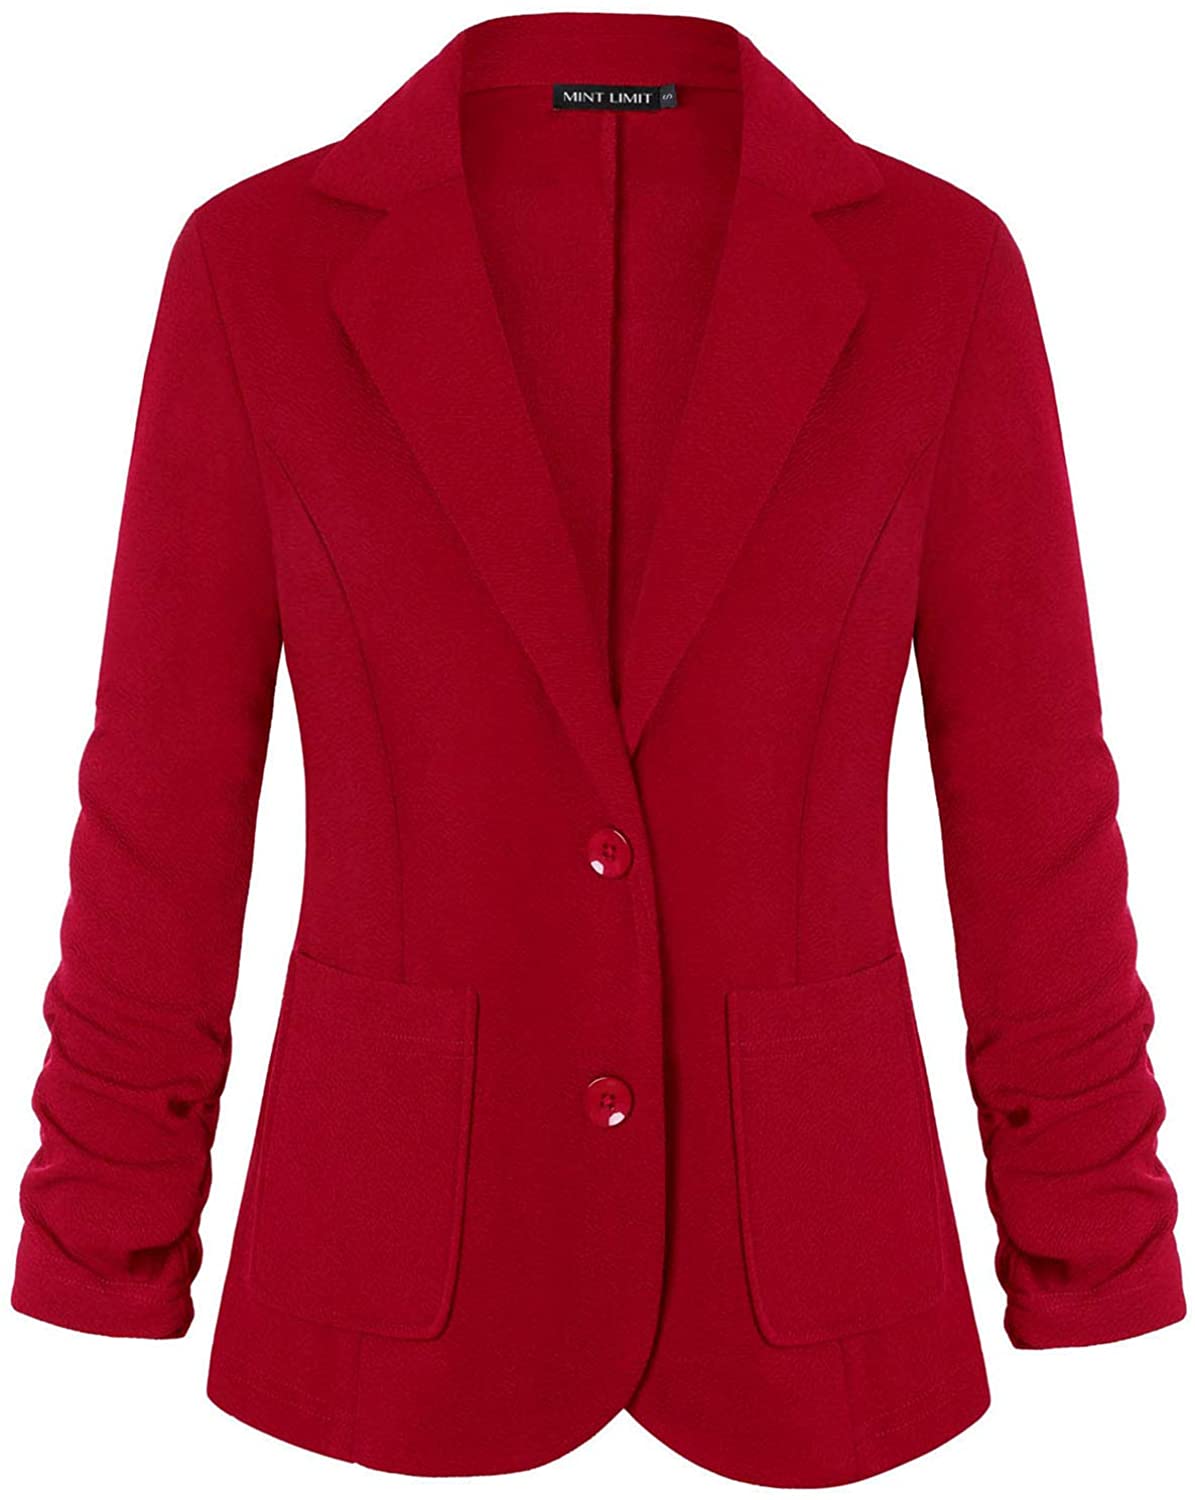 MINTLIMIT Womens Casual 3/4 Sleeve Open Front Blazer Pockets Work Suit Office Jacket